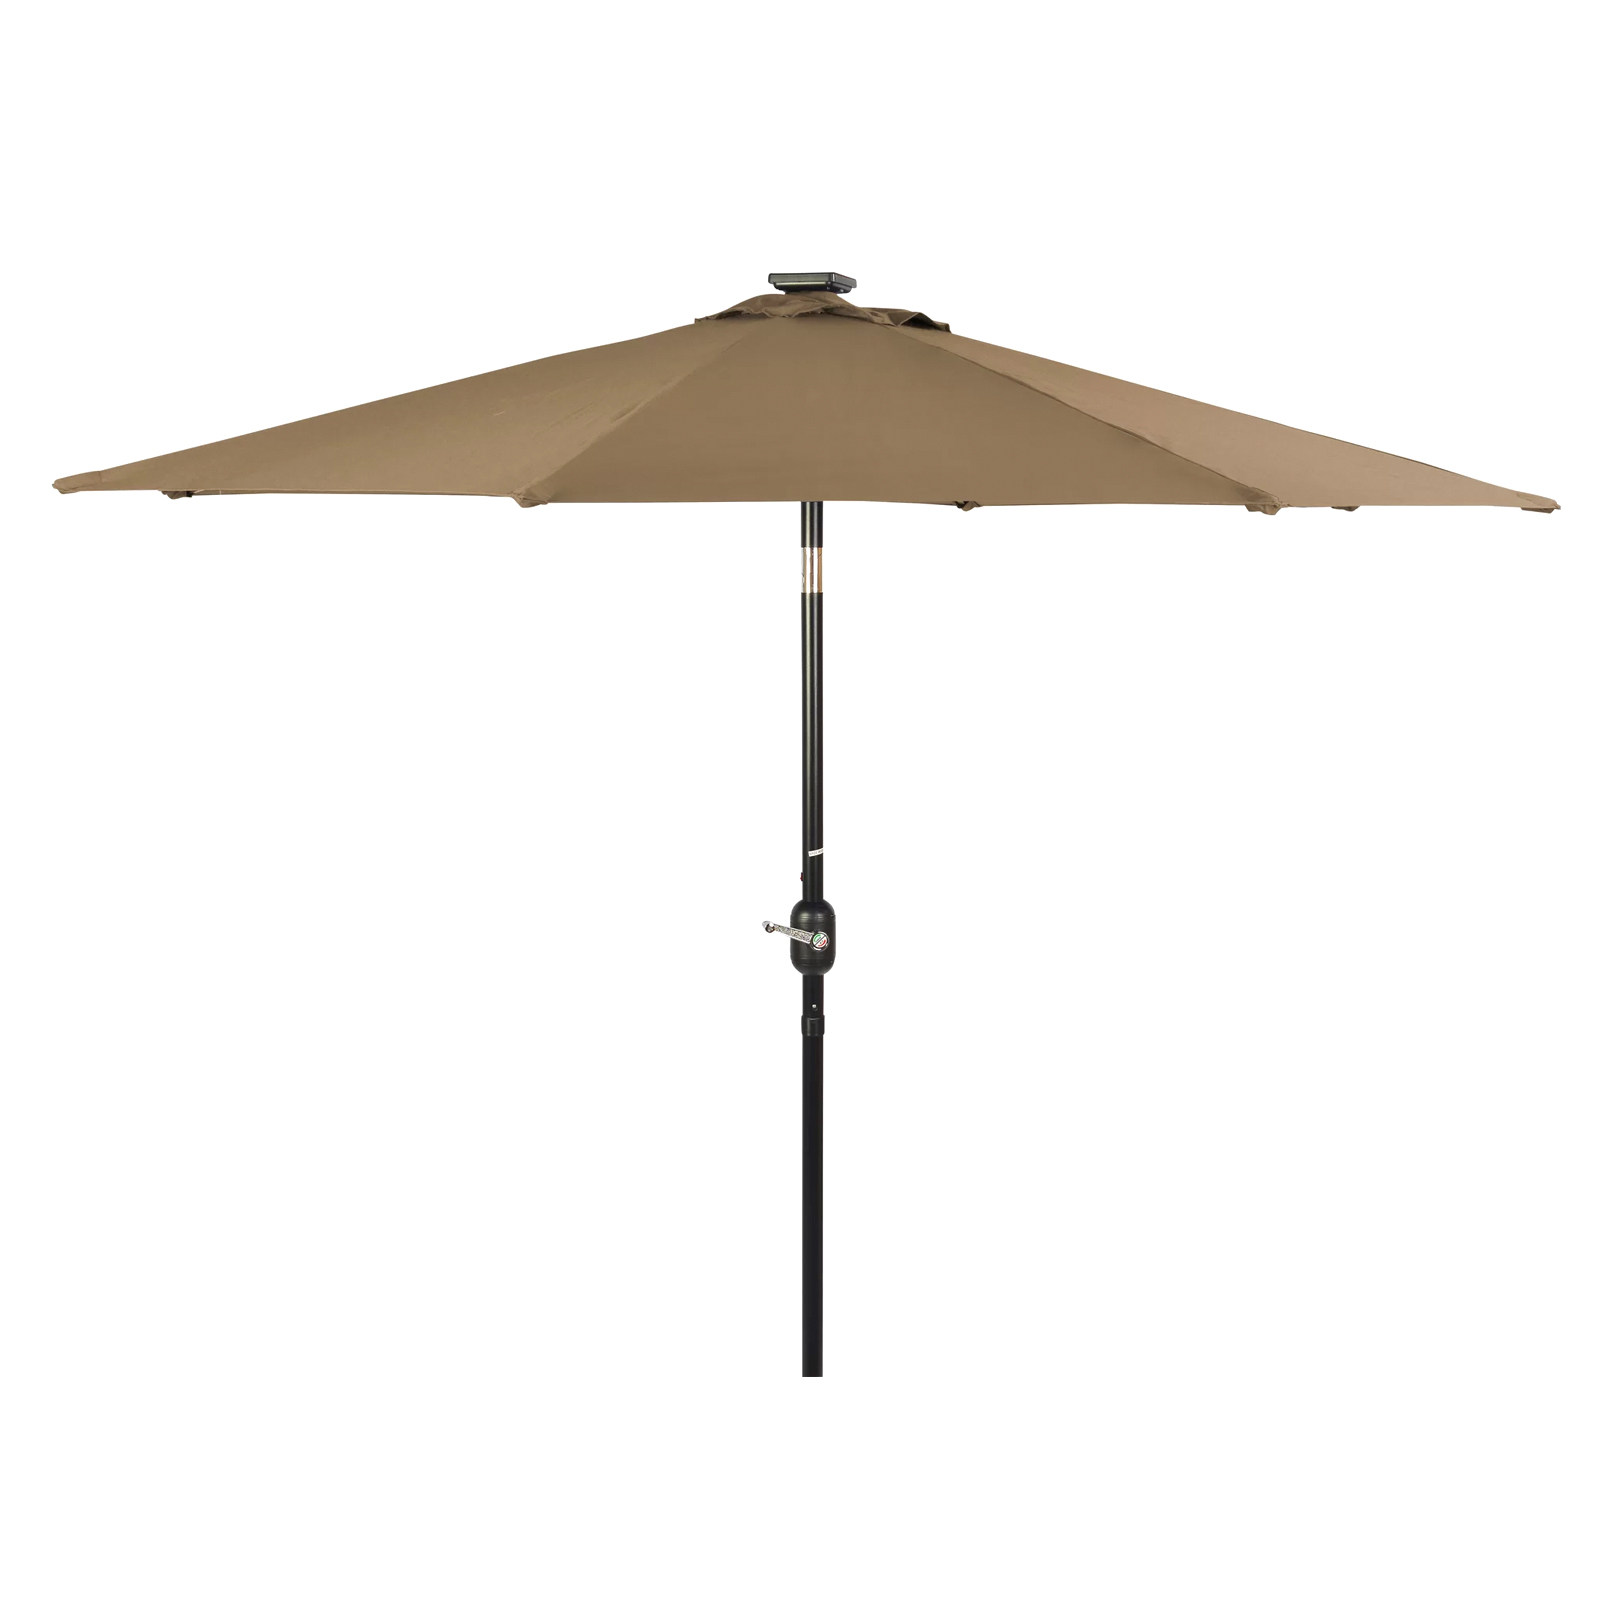 Trademark Innovations 7' Solar Patio Umbrella with LED Lights - Beige